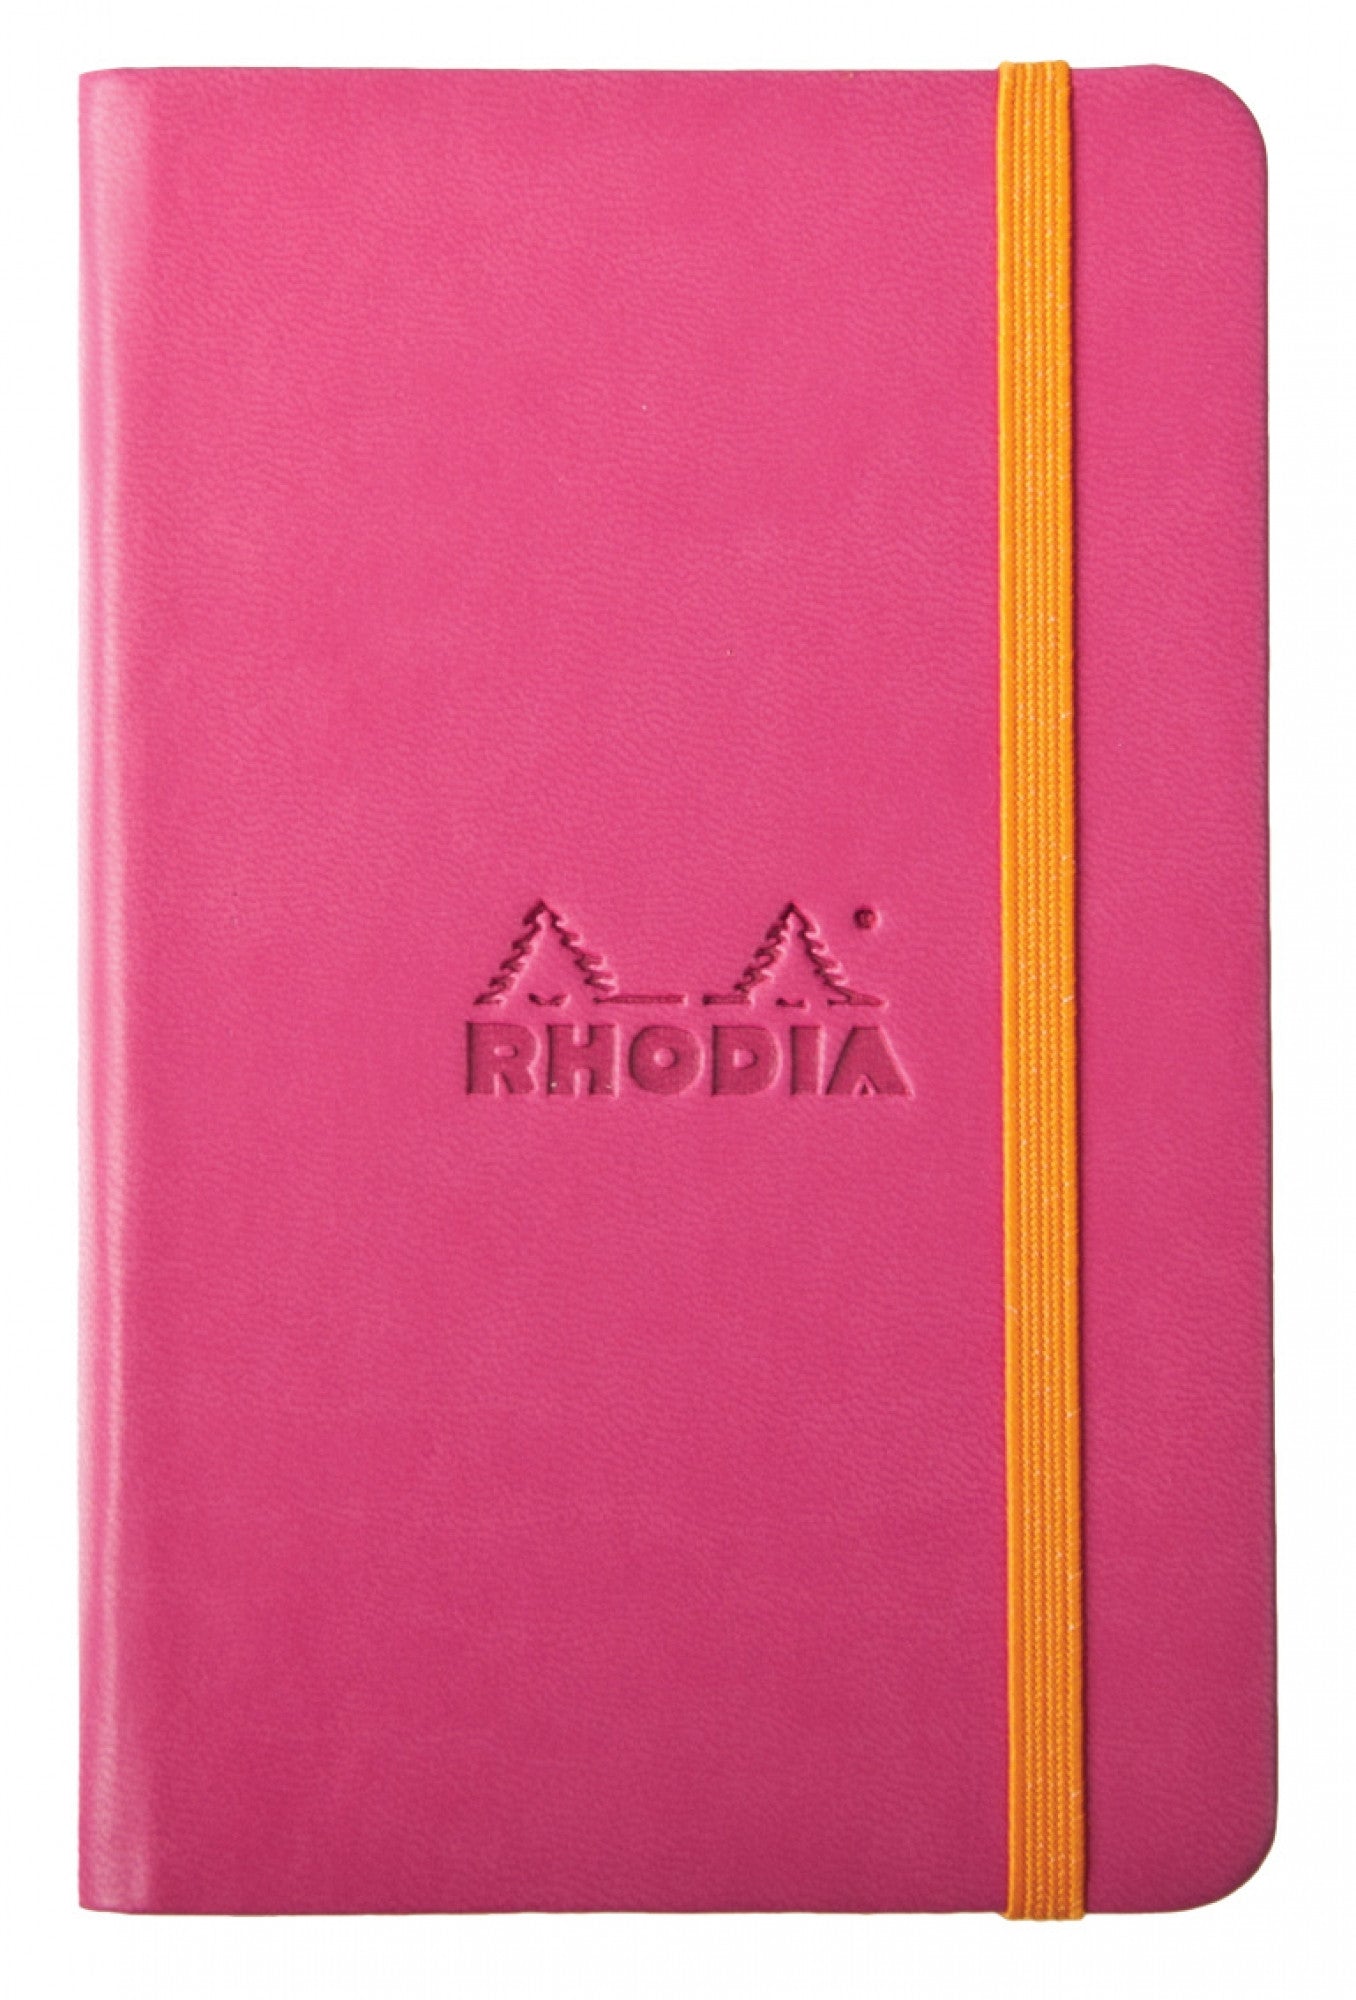 Rhodia Rhodiarama A5 Hardcover Notebook- Raspberry